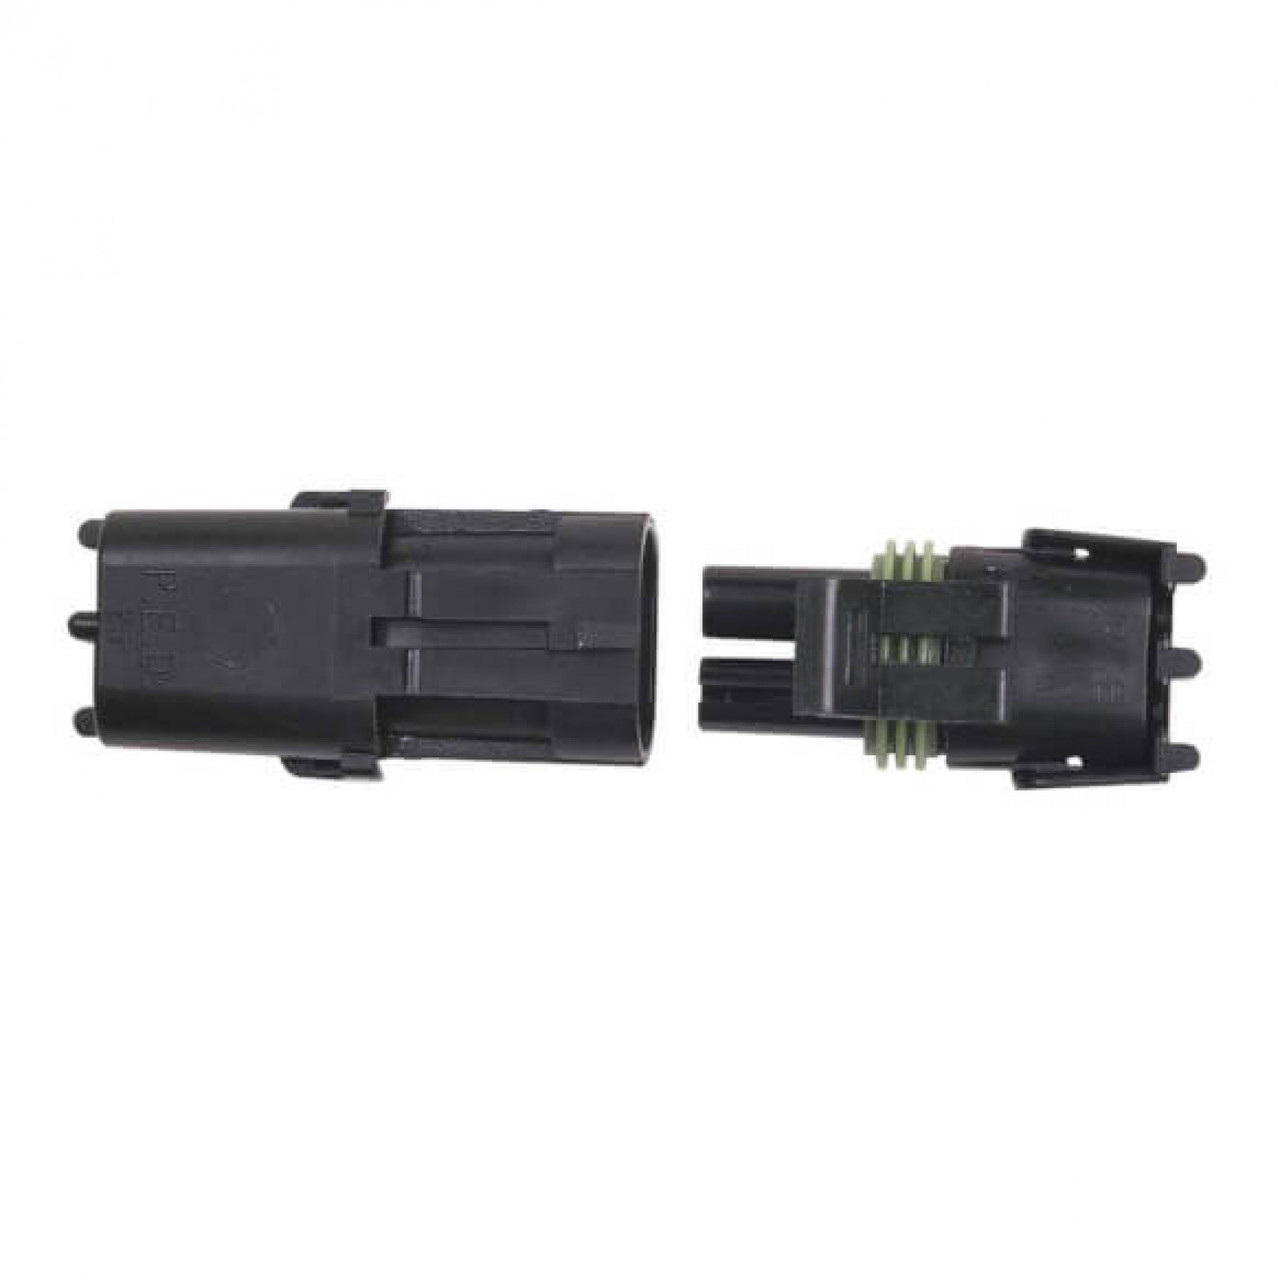 MSD Weathertight Connector - 2-Pin  - Qty 1 (MSD-28173)